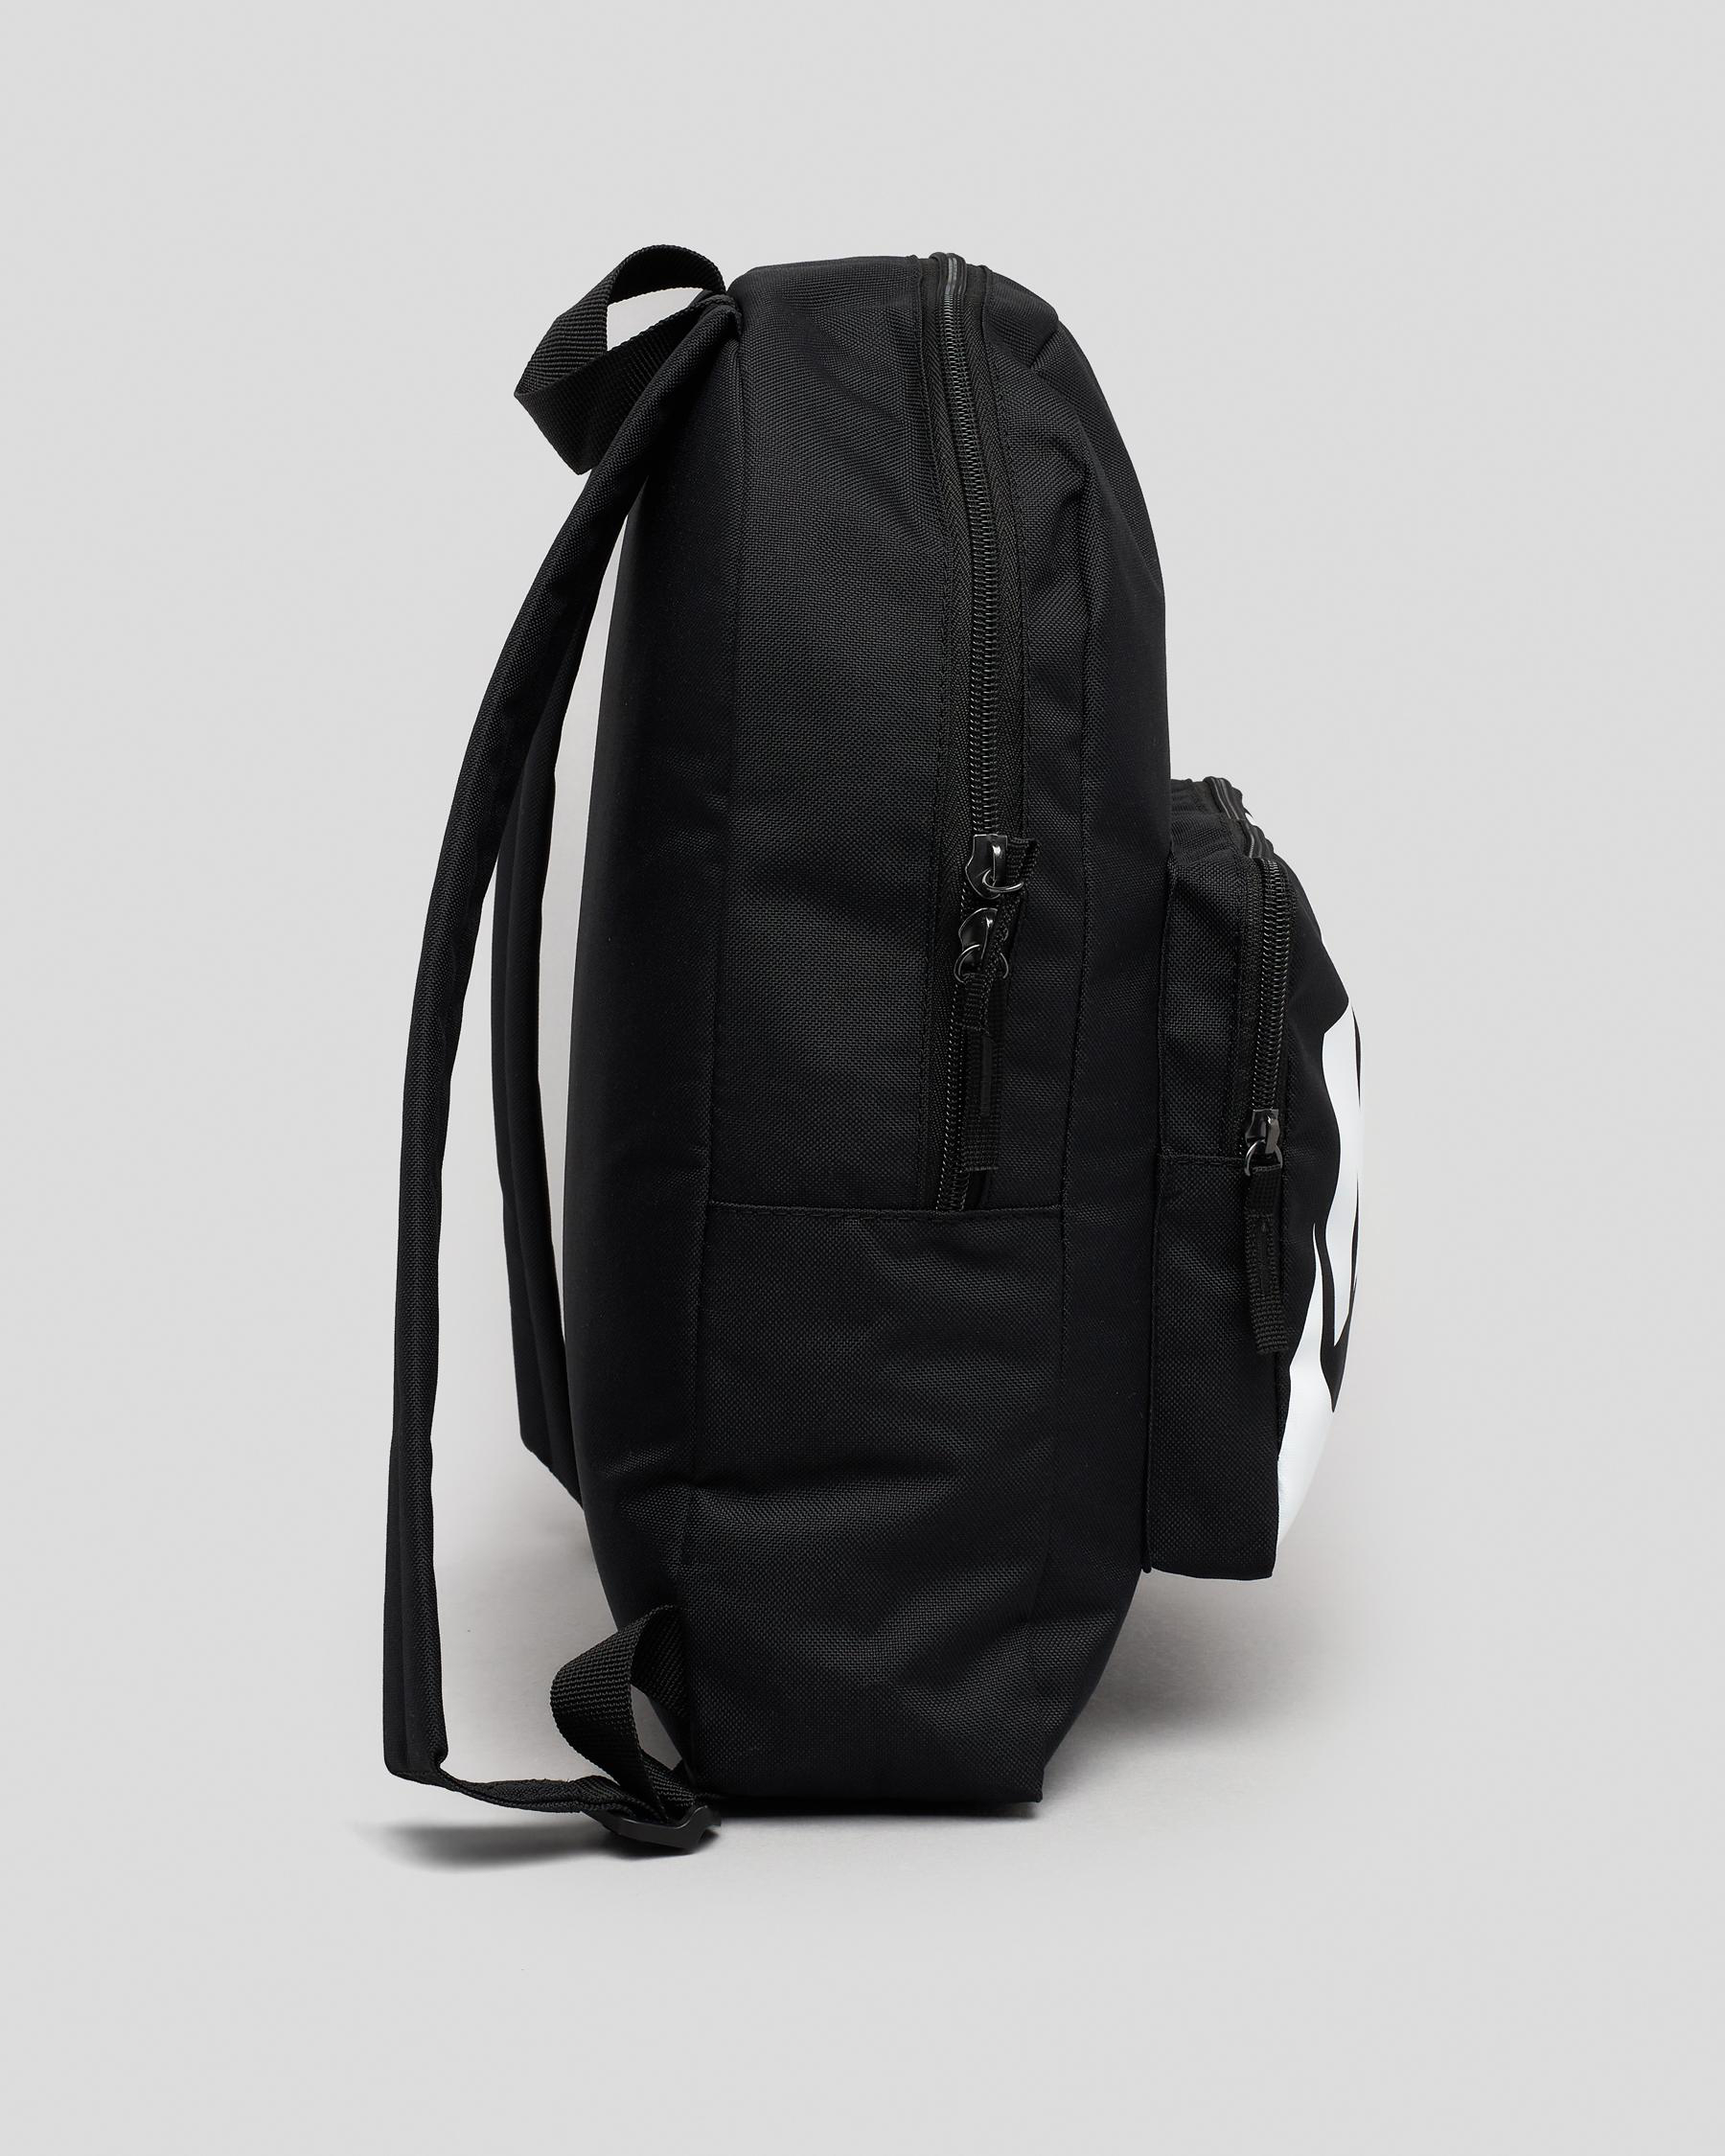 Nike Classic Backpack In Black/black/white - FREE* Shipping & Easy